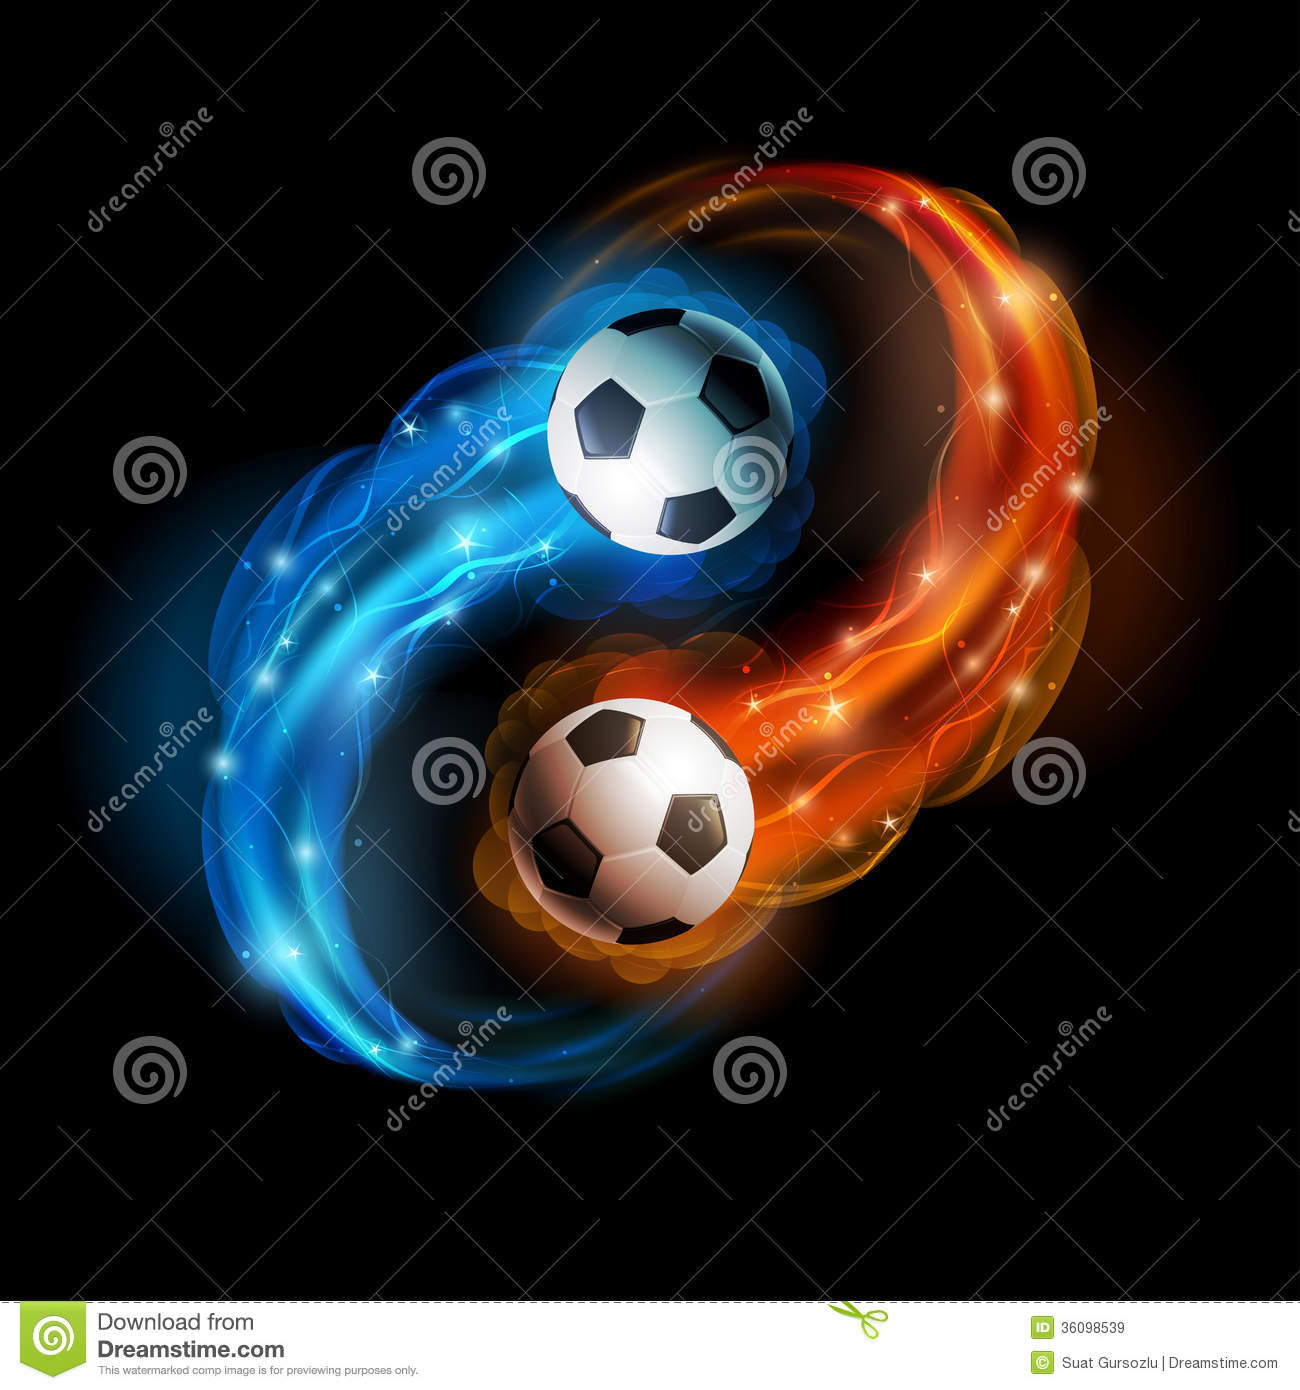 Cool Soccer Ball Wallpaper - WallpaperSafari